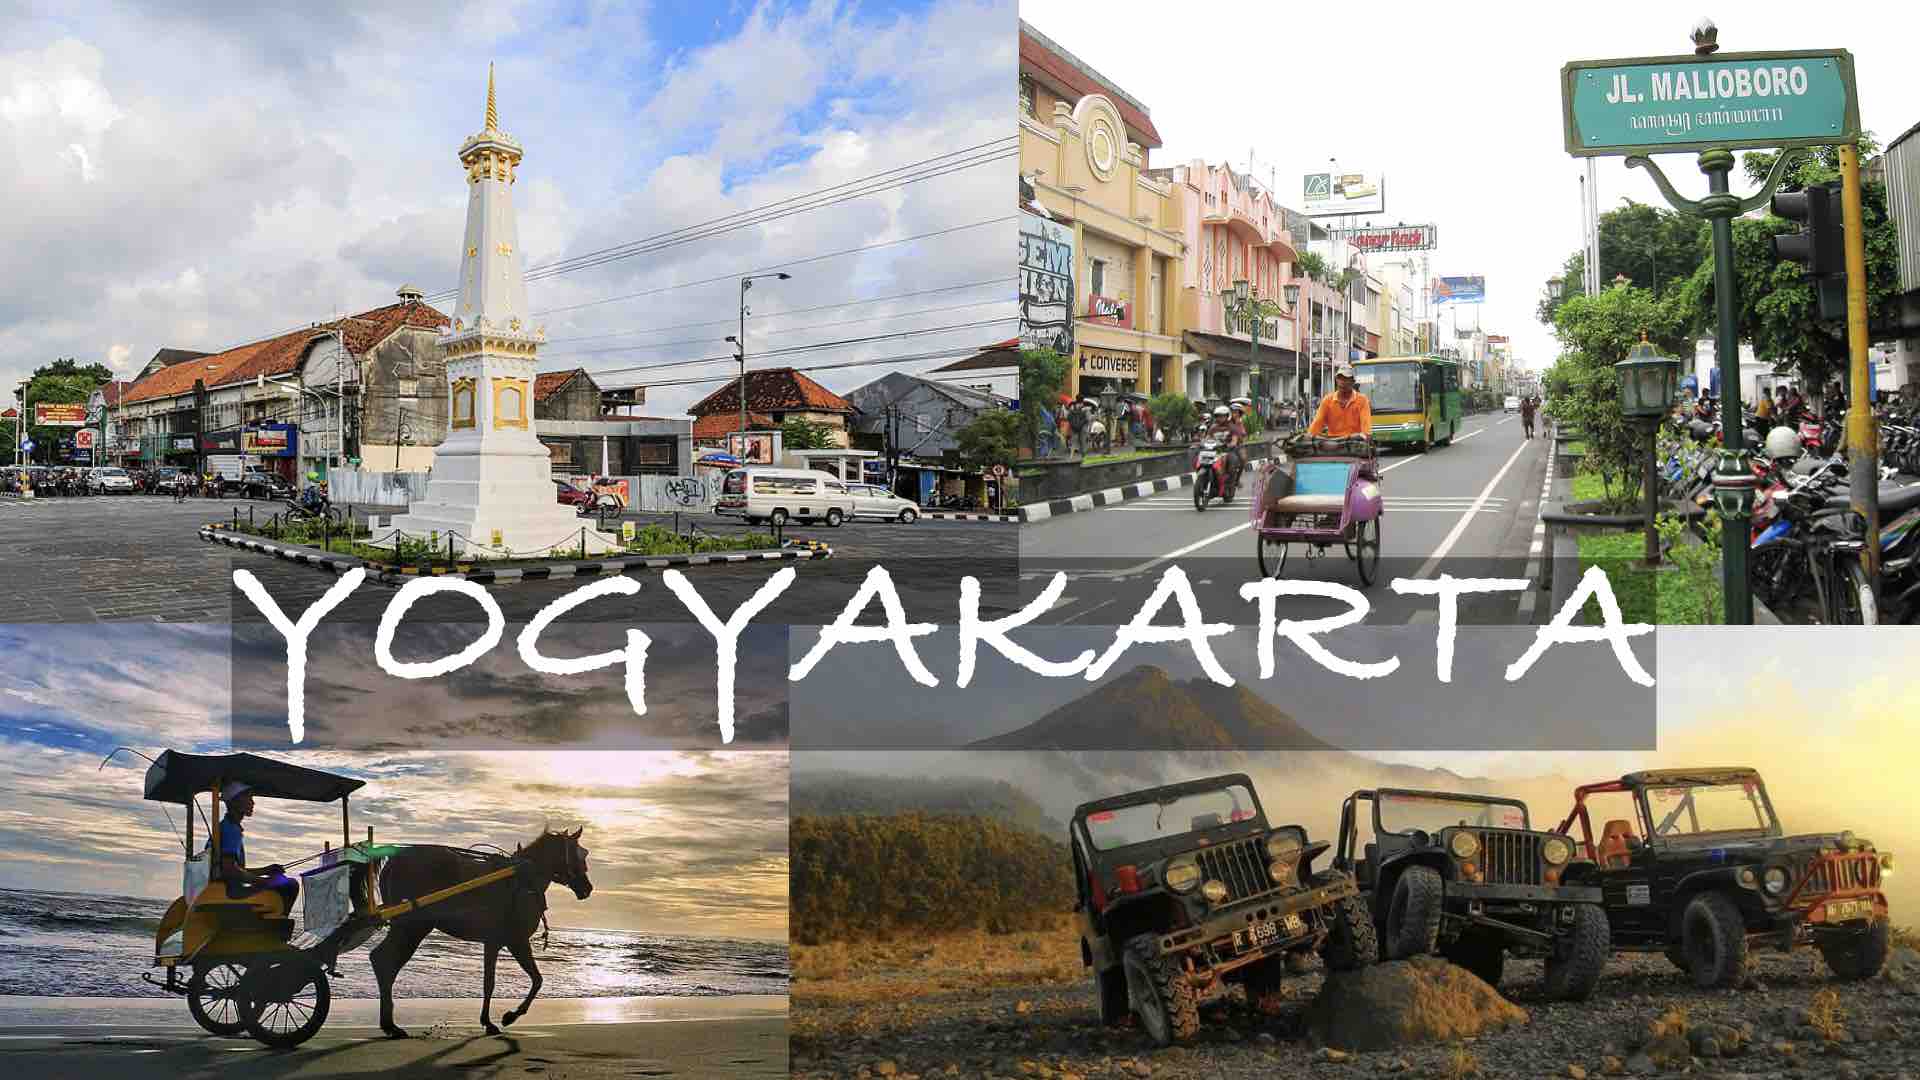 Destinasi Wisata Di Yogyakarta Selain Malioboro Yang Asyik Dikunjungi - Uprint.id